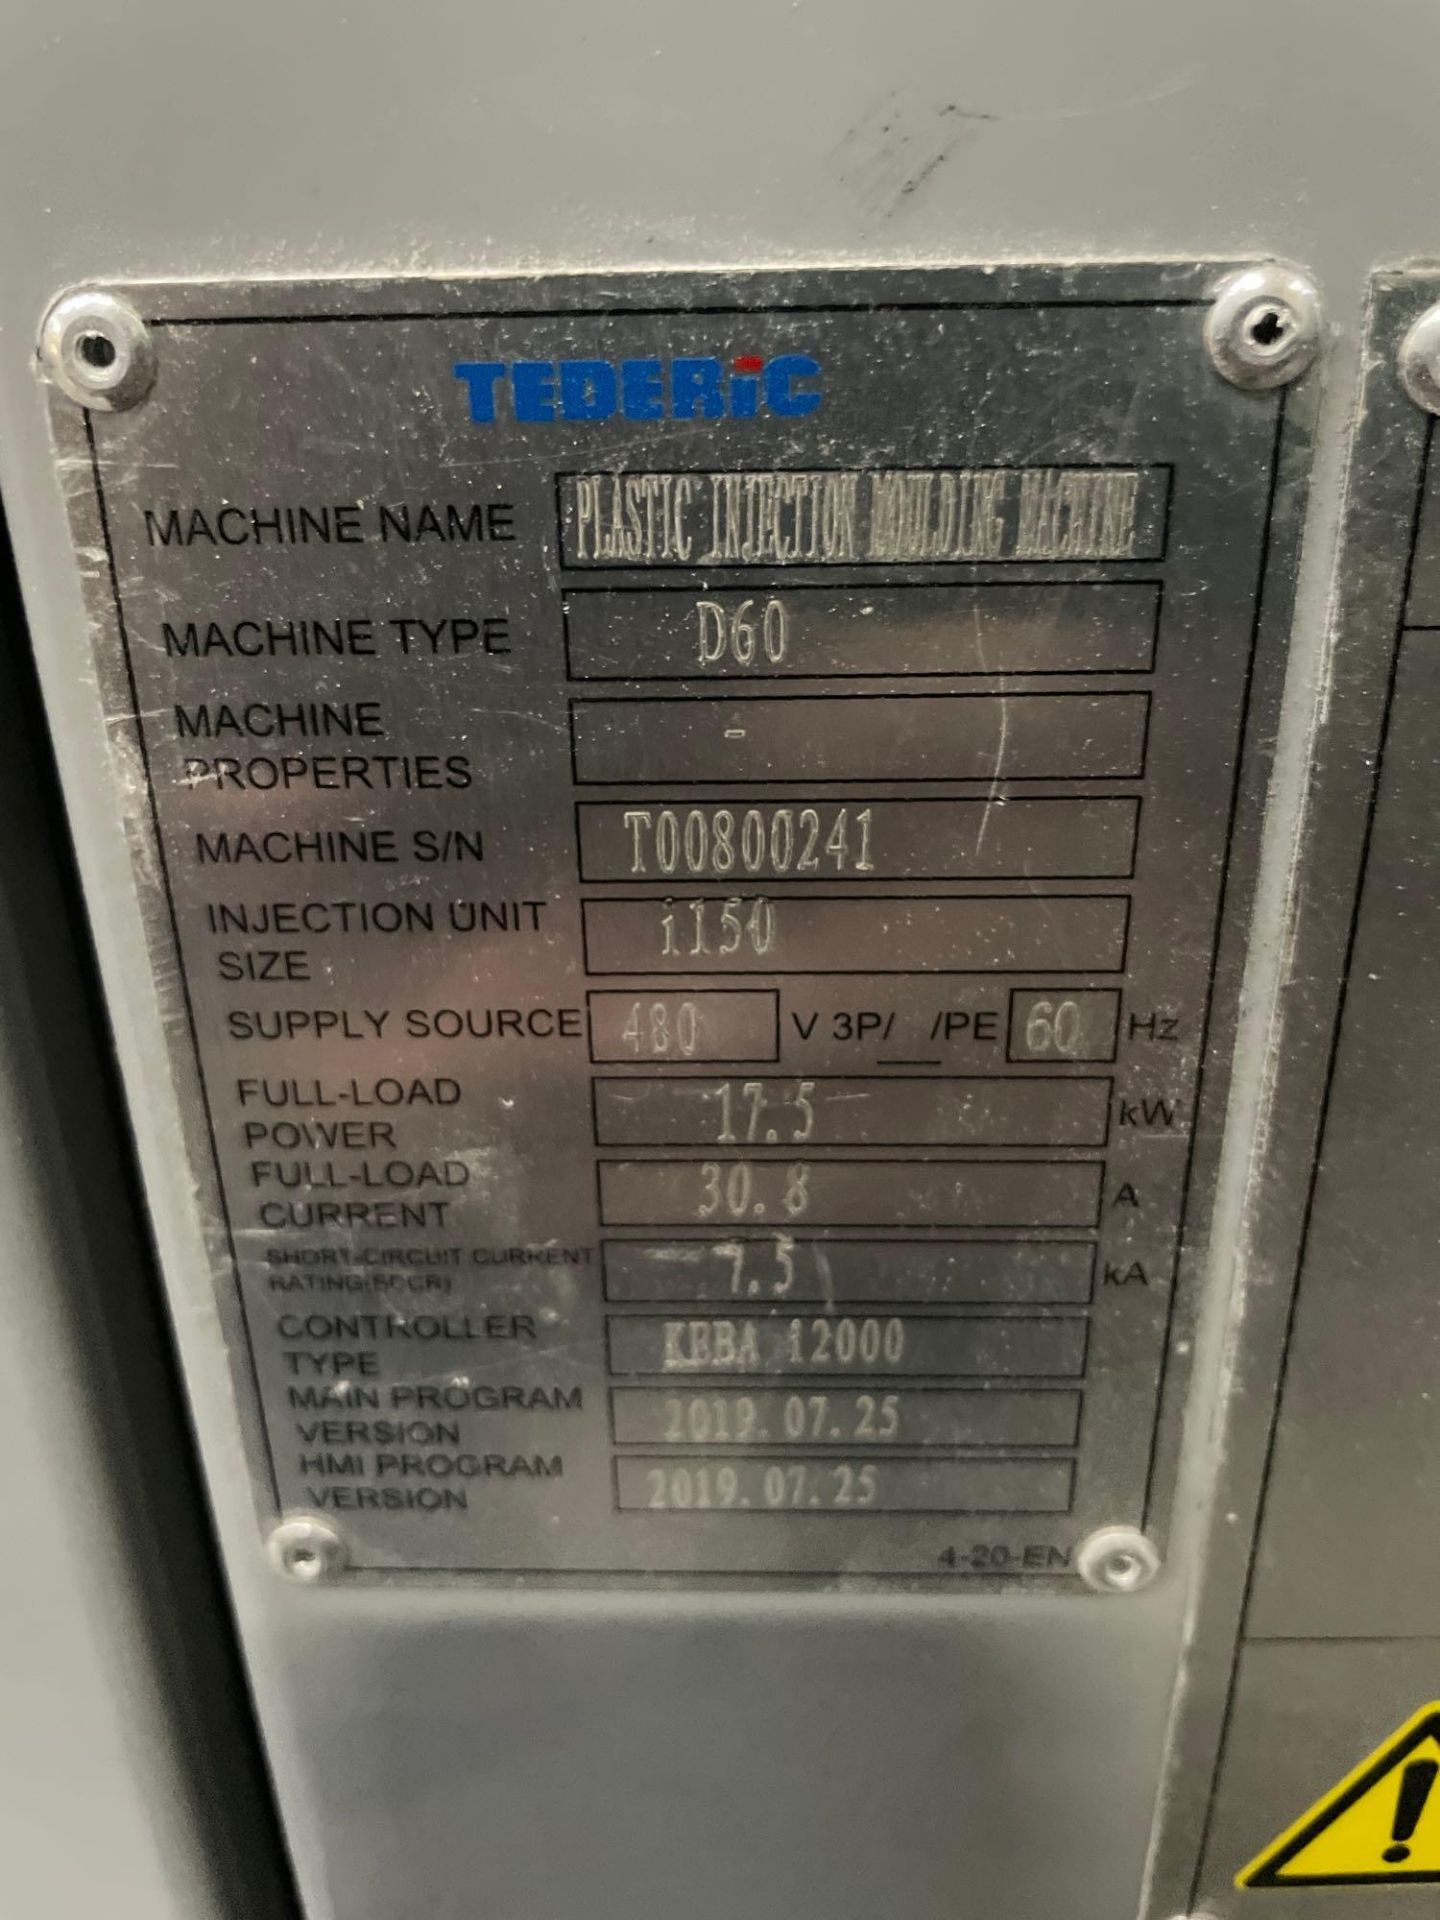 66 Ton Tederic D60 Plastic Injection Molder, Keba 12000, s/n T00800241, New 2019 - Image 11 of 11